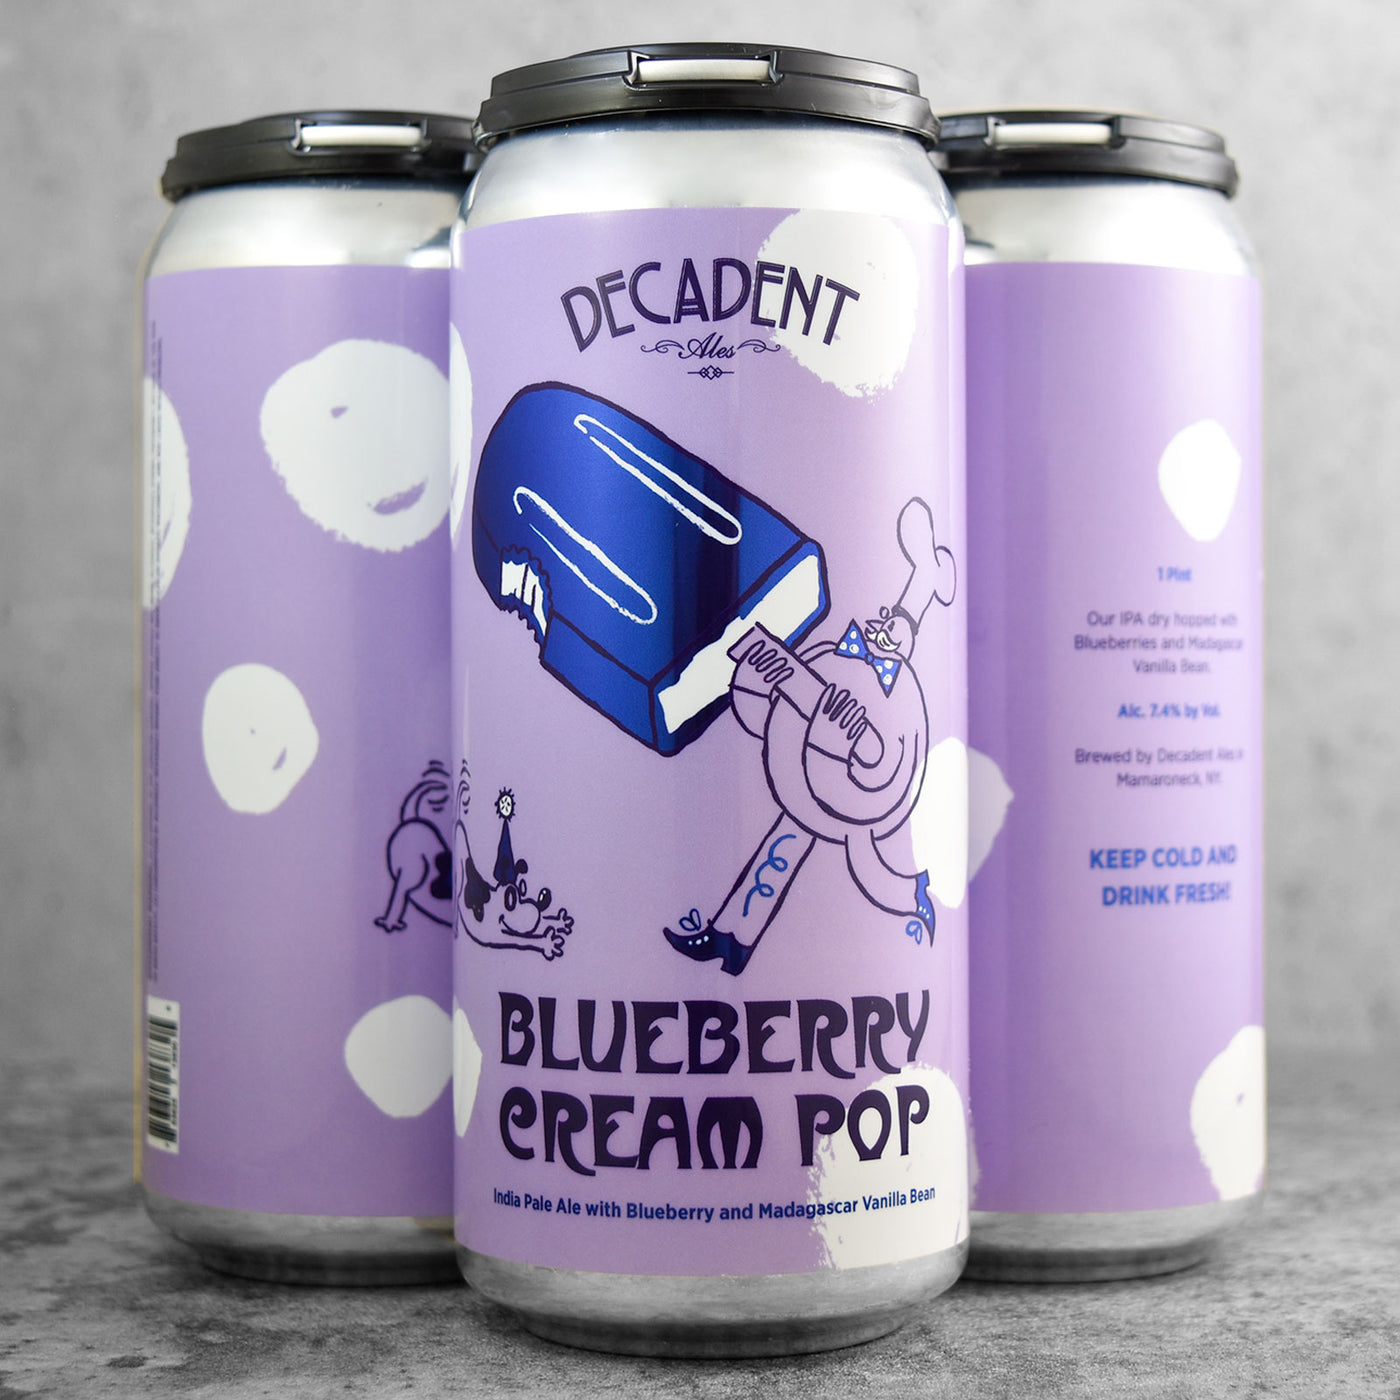 Decadent Blueberry Cream Pop